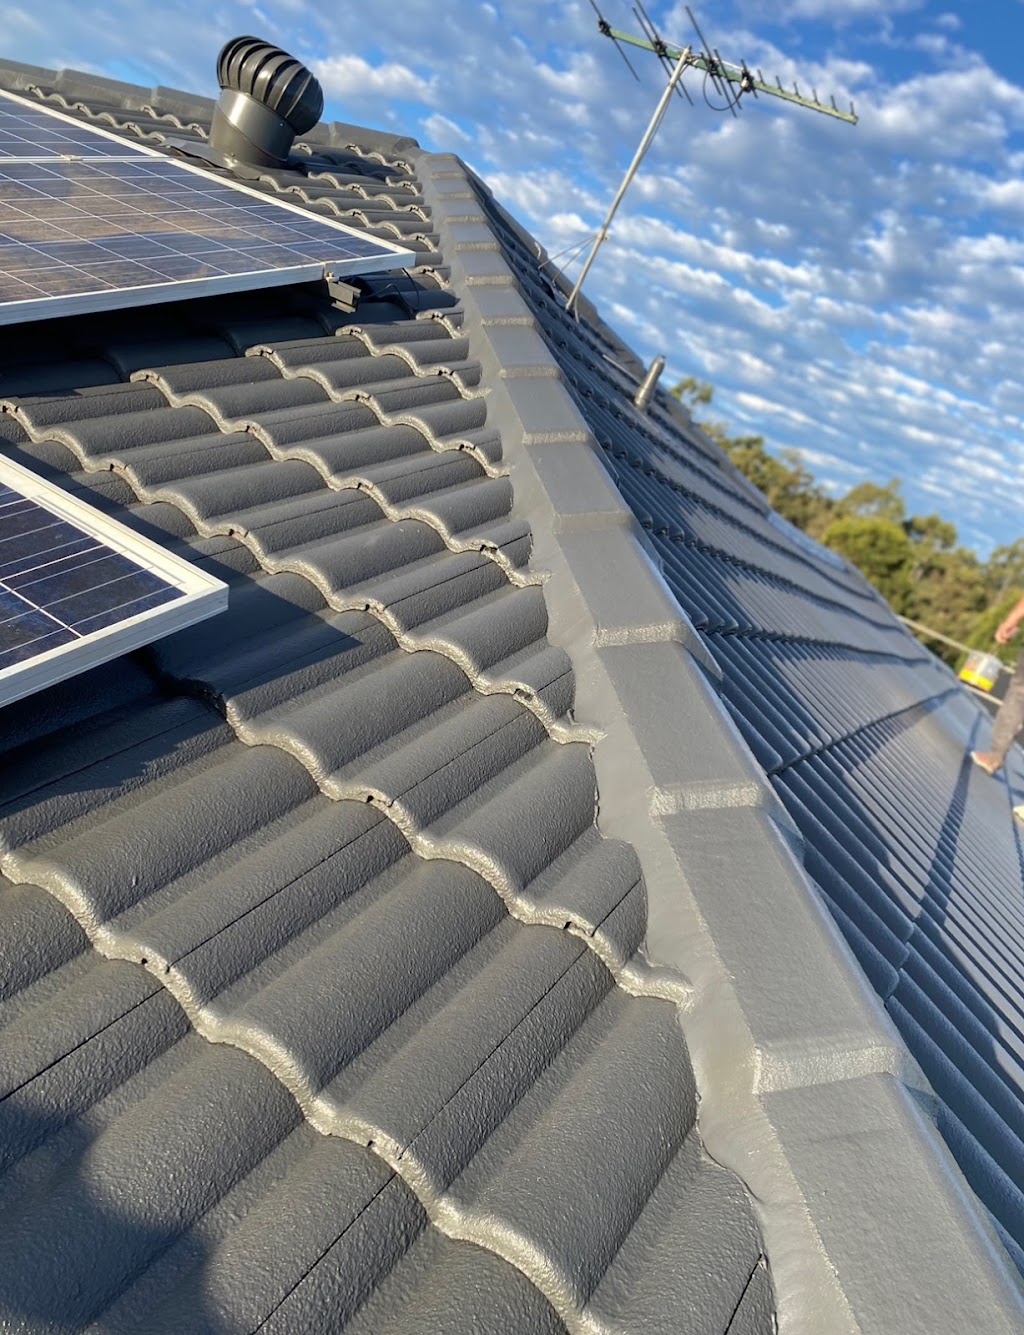 Rainbird Roof Restorations | 12 Stonehaven Pl, Narangba QLD 4504, Australia | Phone: 0424 238 025